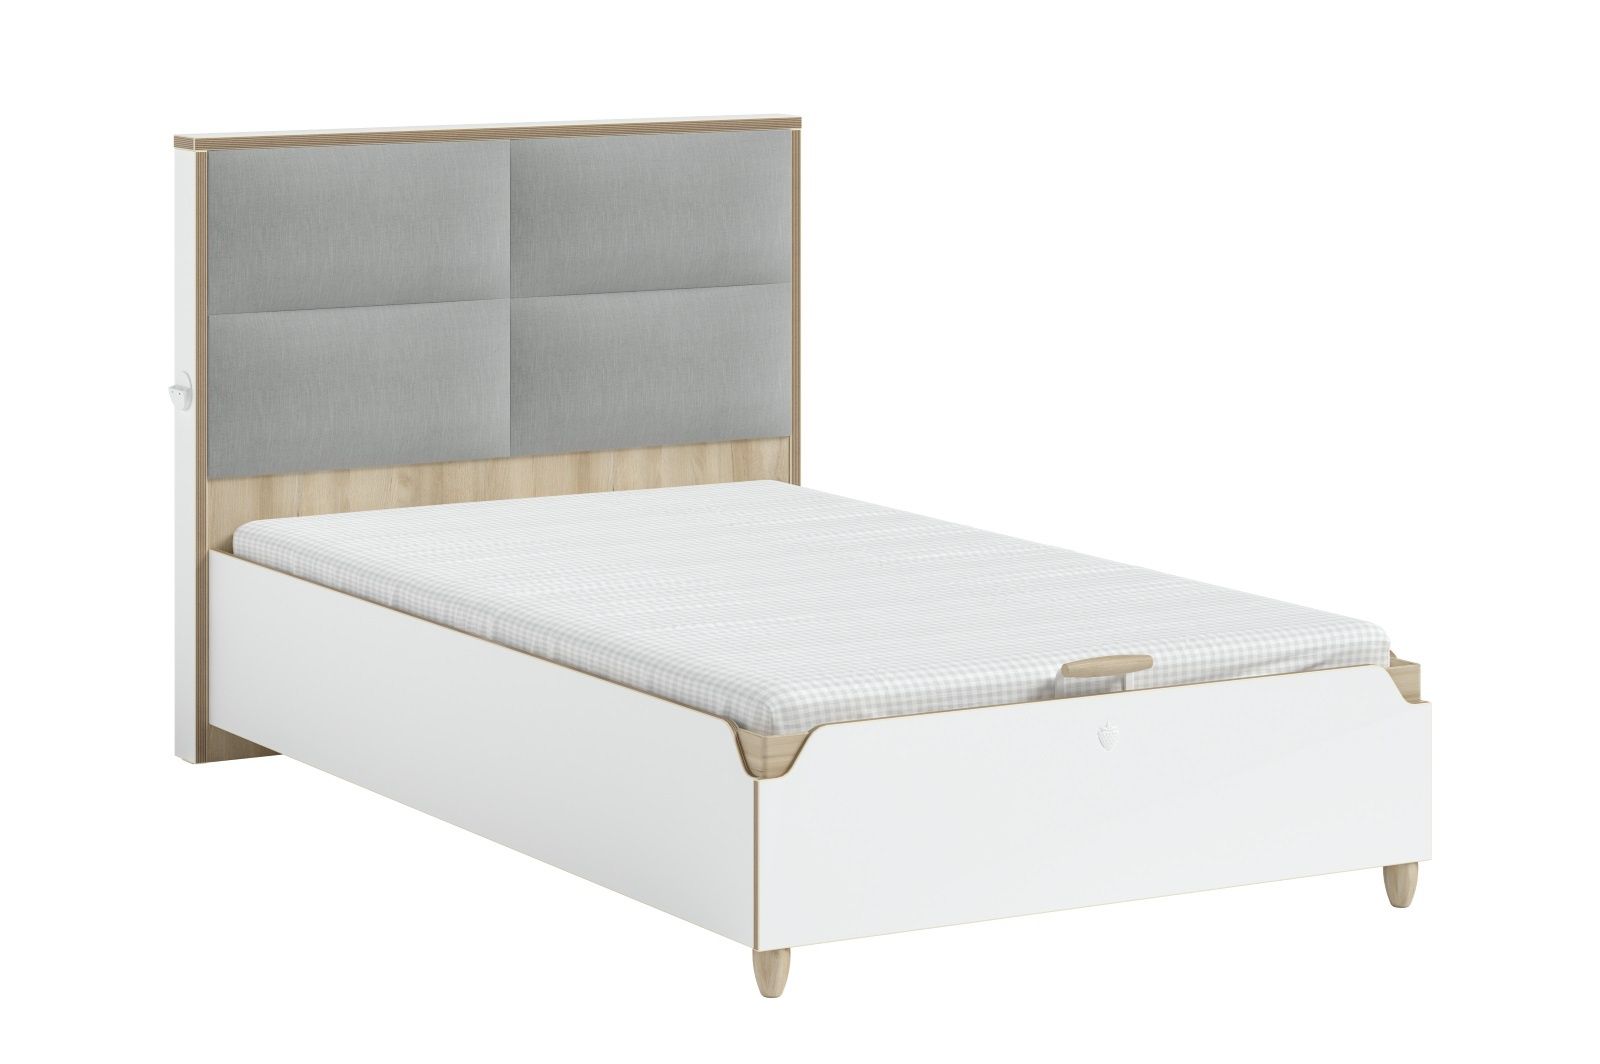 Studentská postel 120x200cm s úložným prostorem Dylan - bílá/dub světlý - Nábytek Harmonia s.r.o.